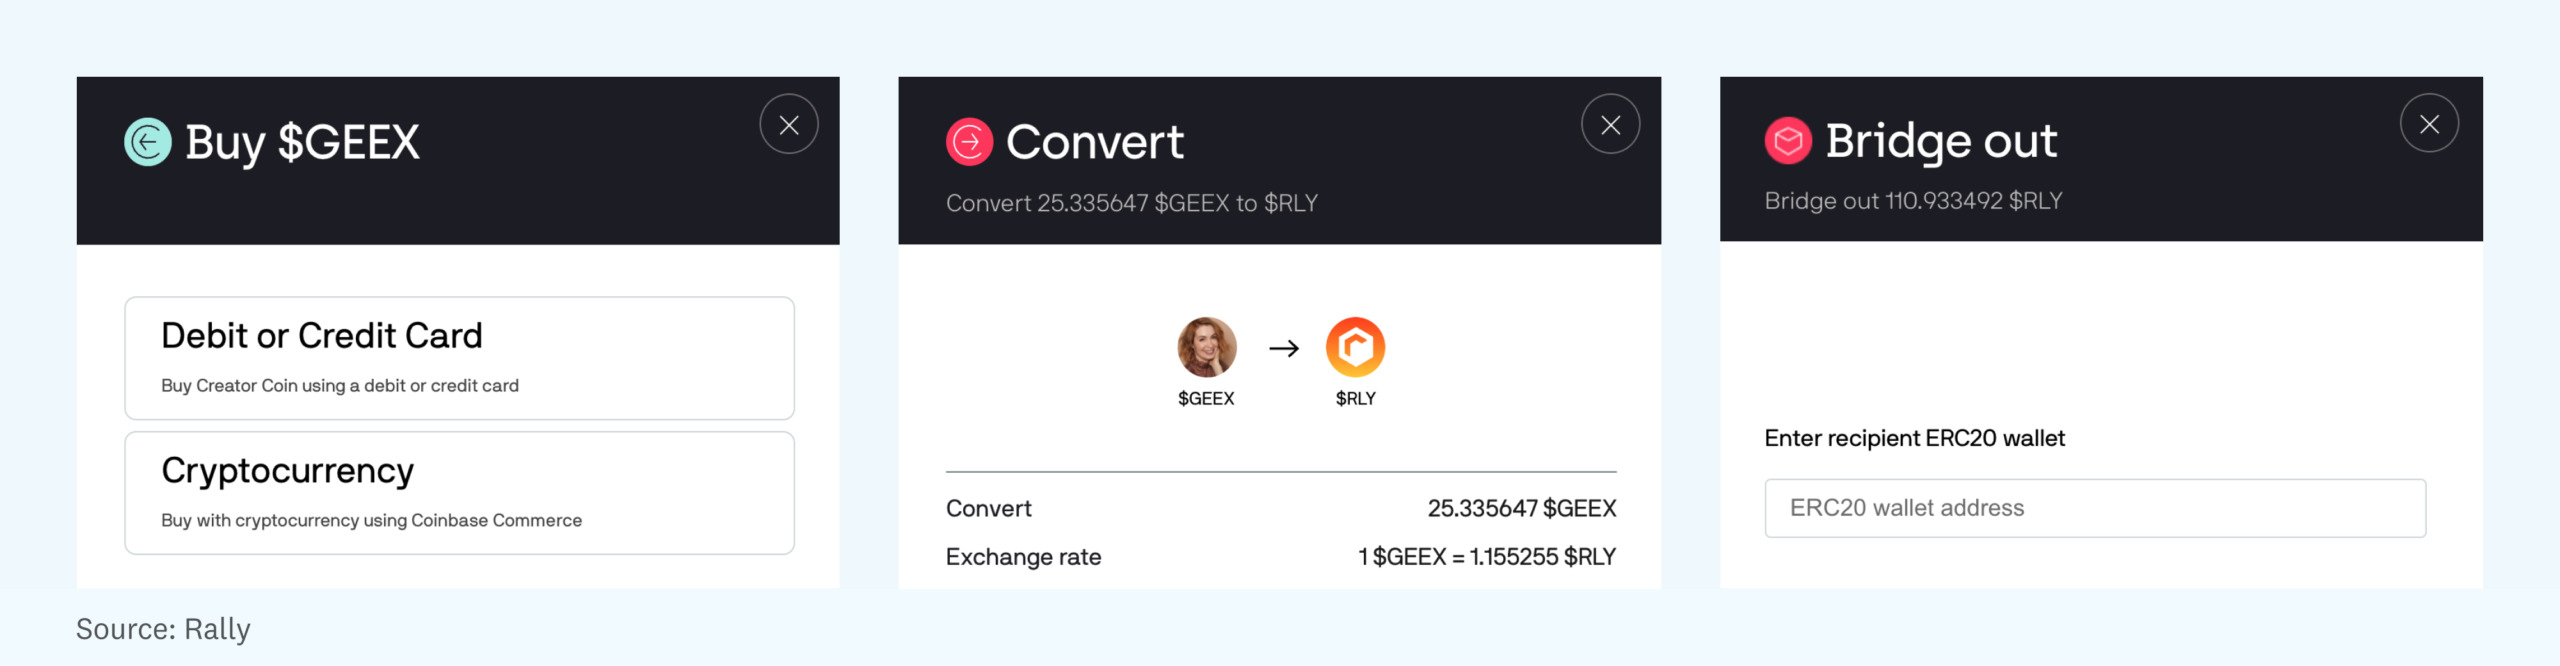 Rally creator token conversion flow